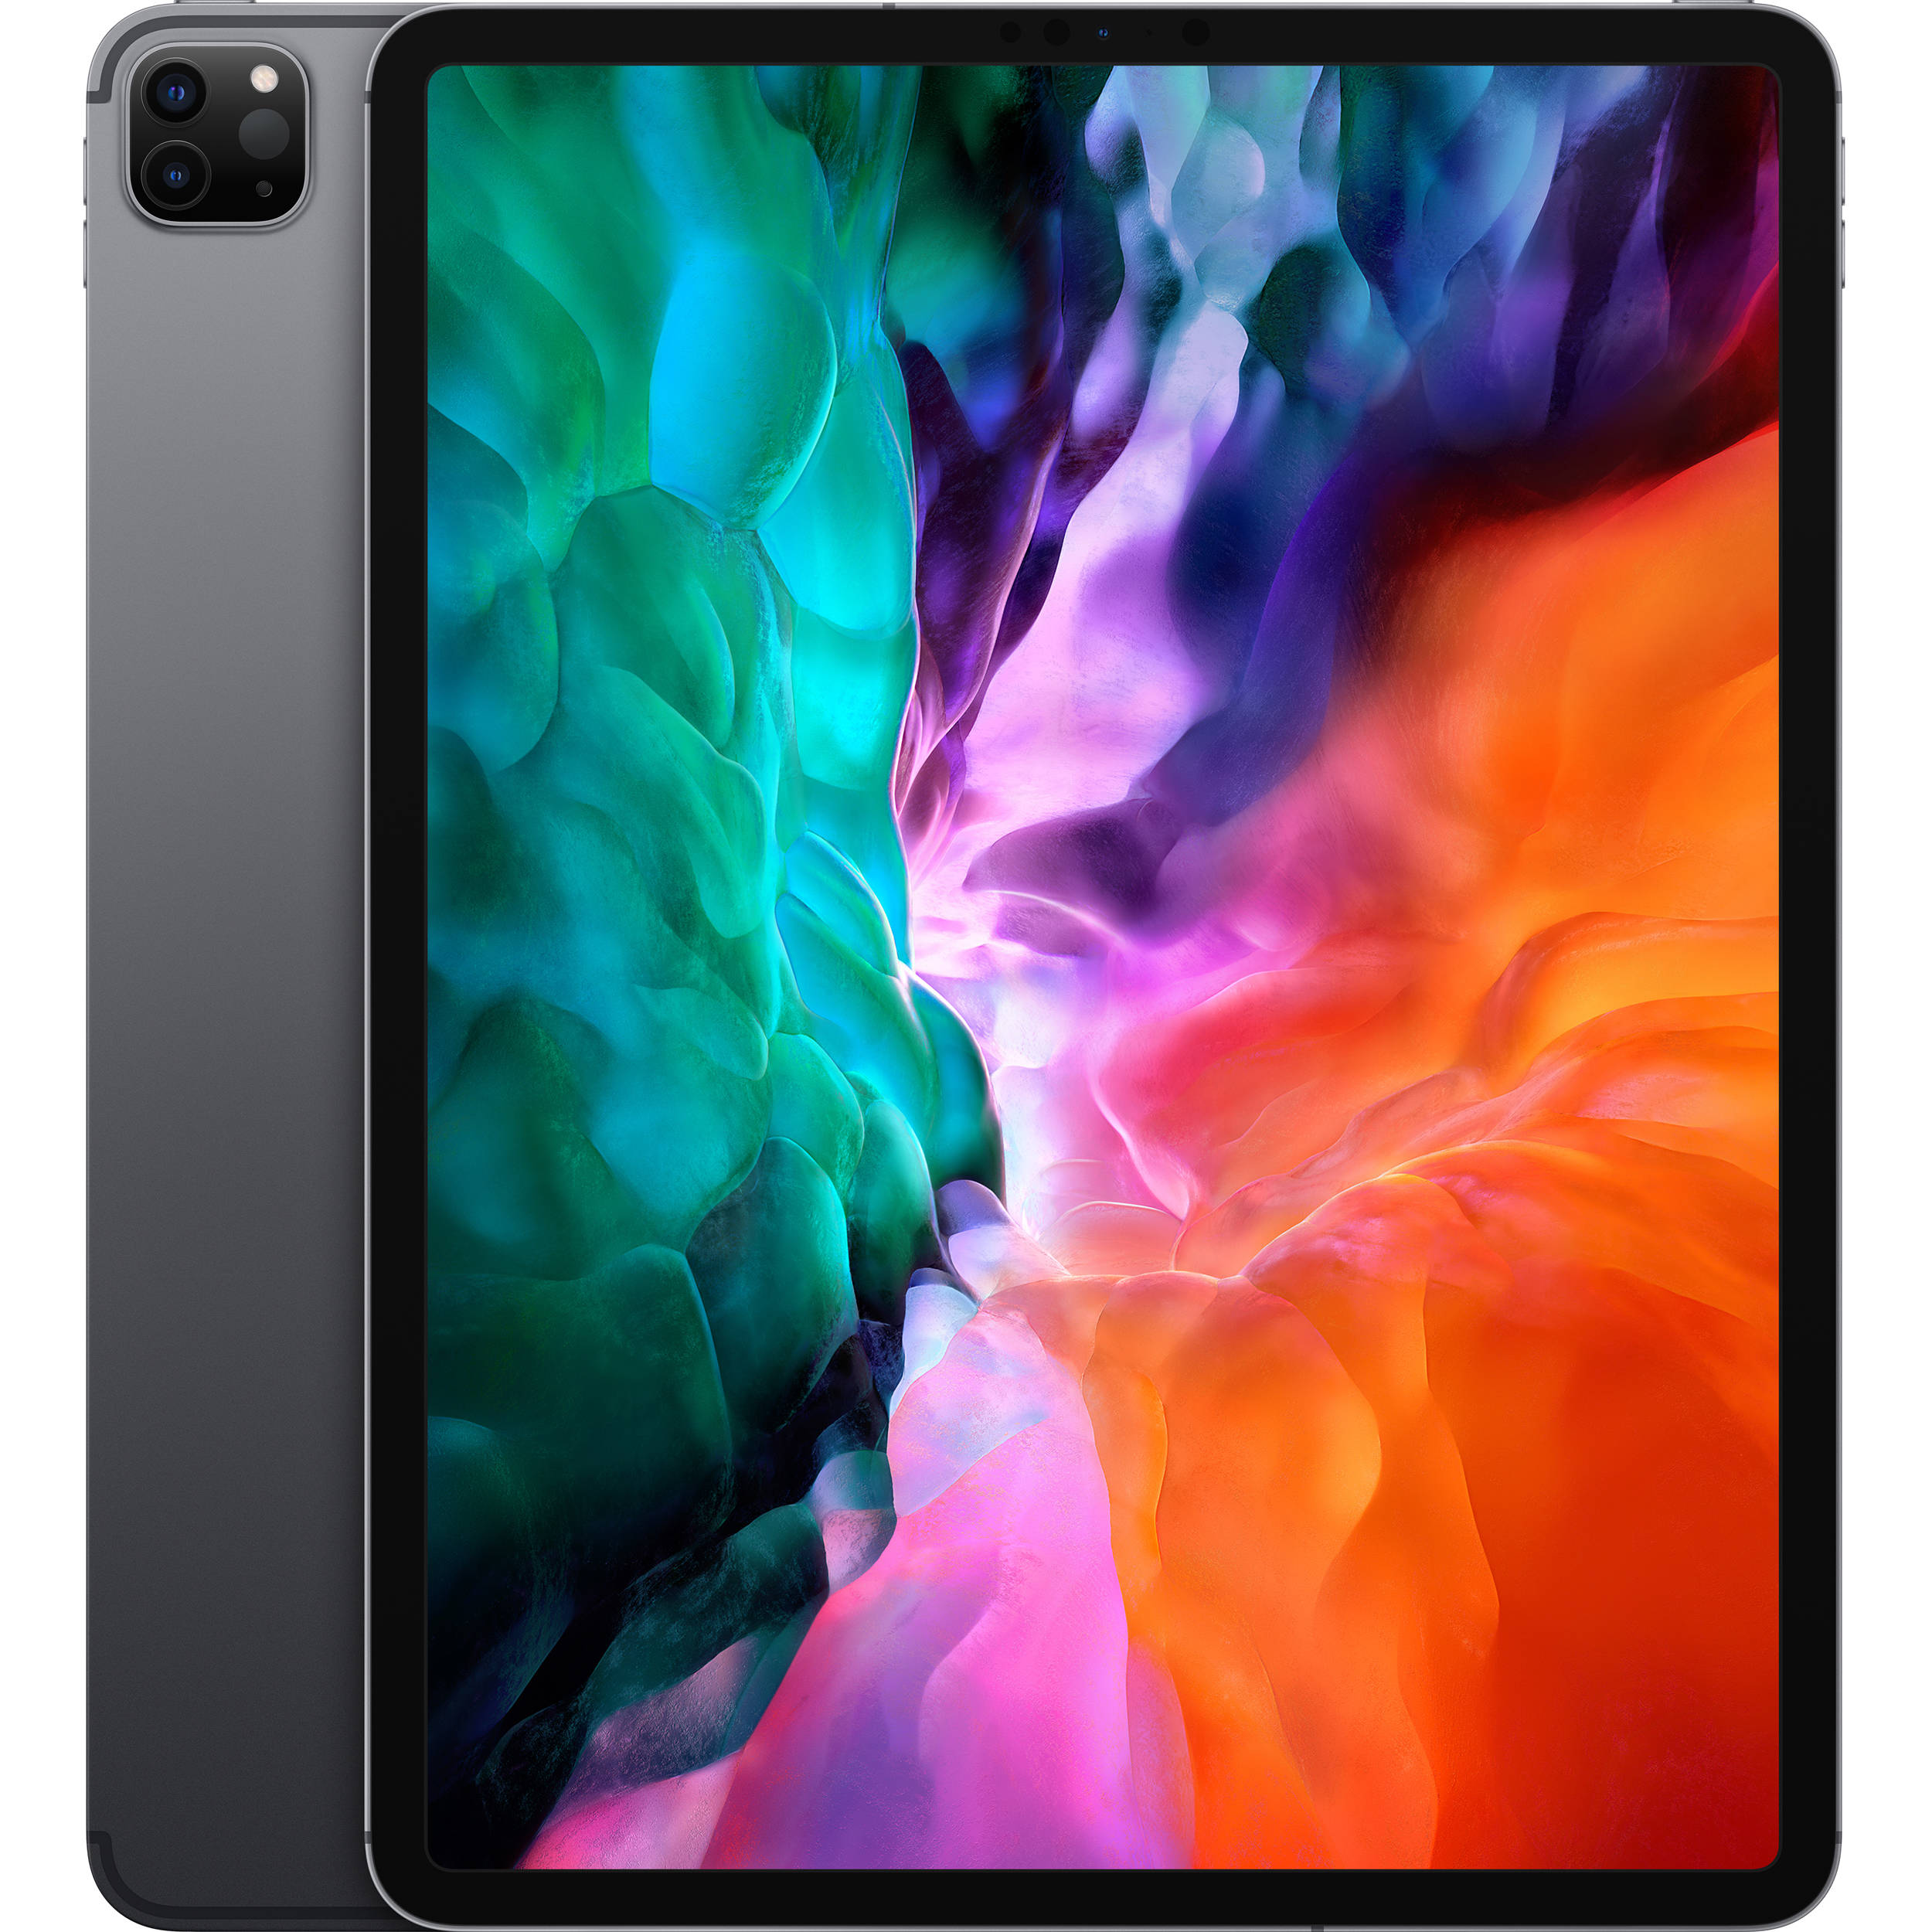 2020 Apple iPad Pro 12.9-inch, Wi-Fi + Cellular, 128GB - Space Grey - Good